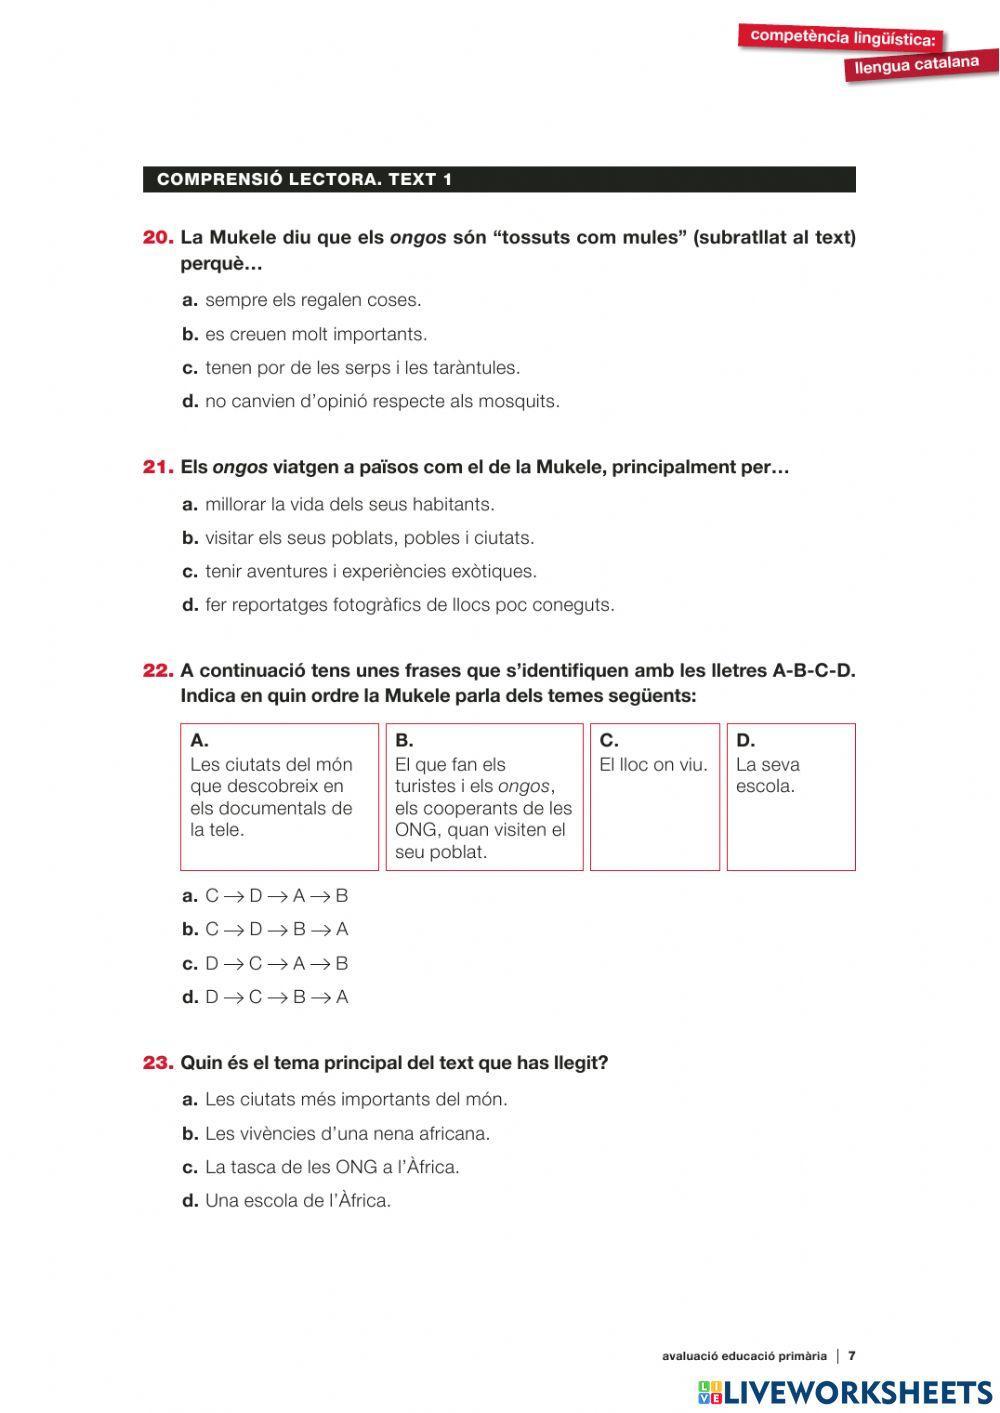 Competencies bàsiques 6è català